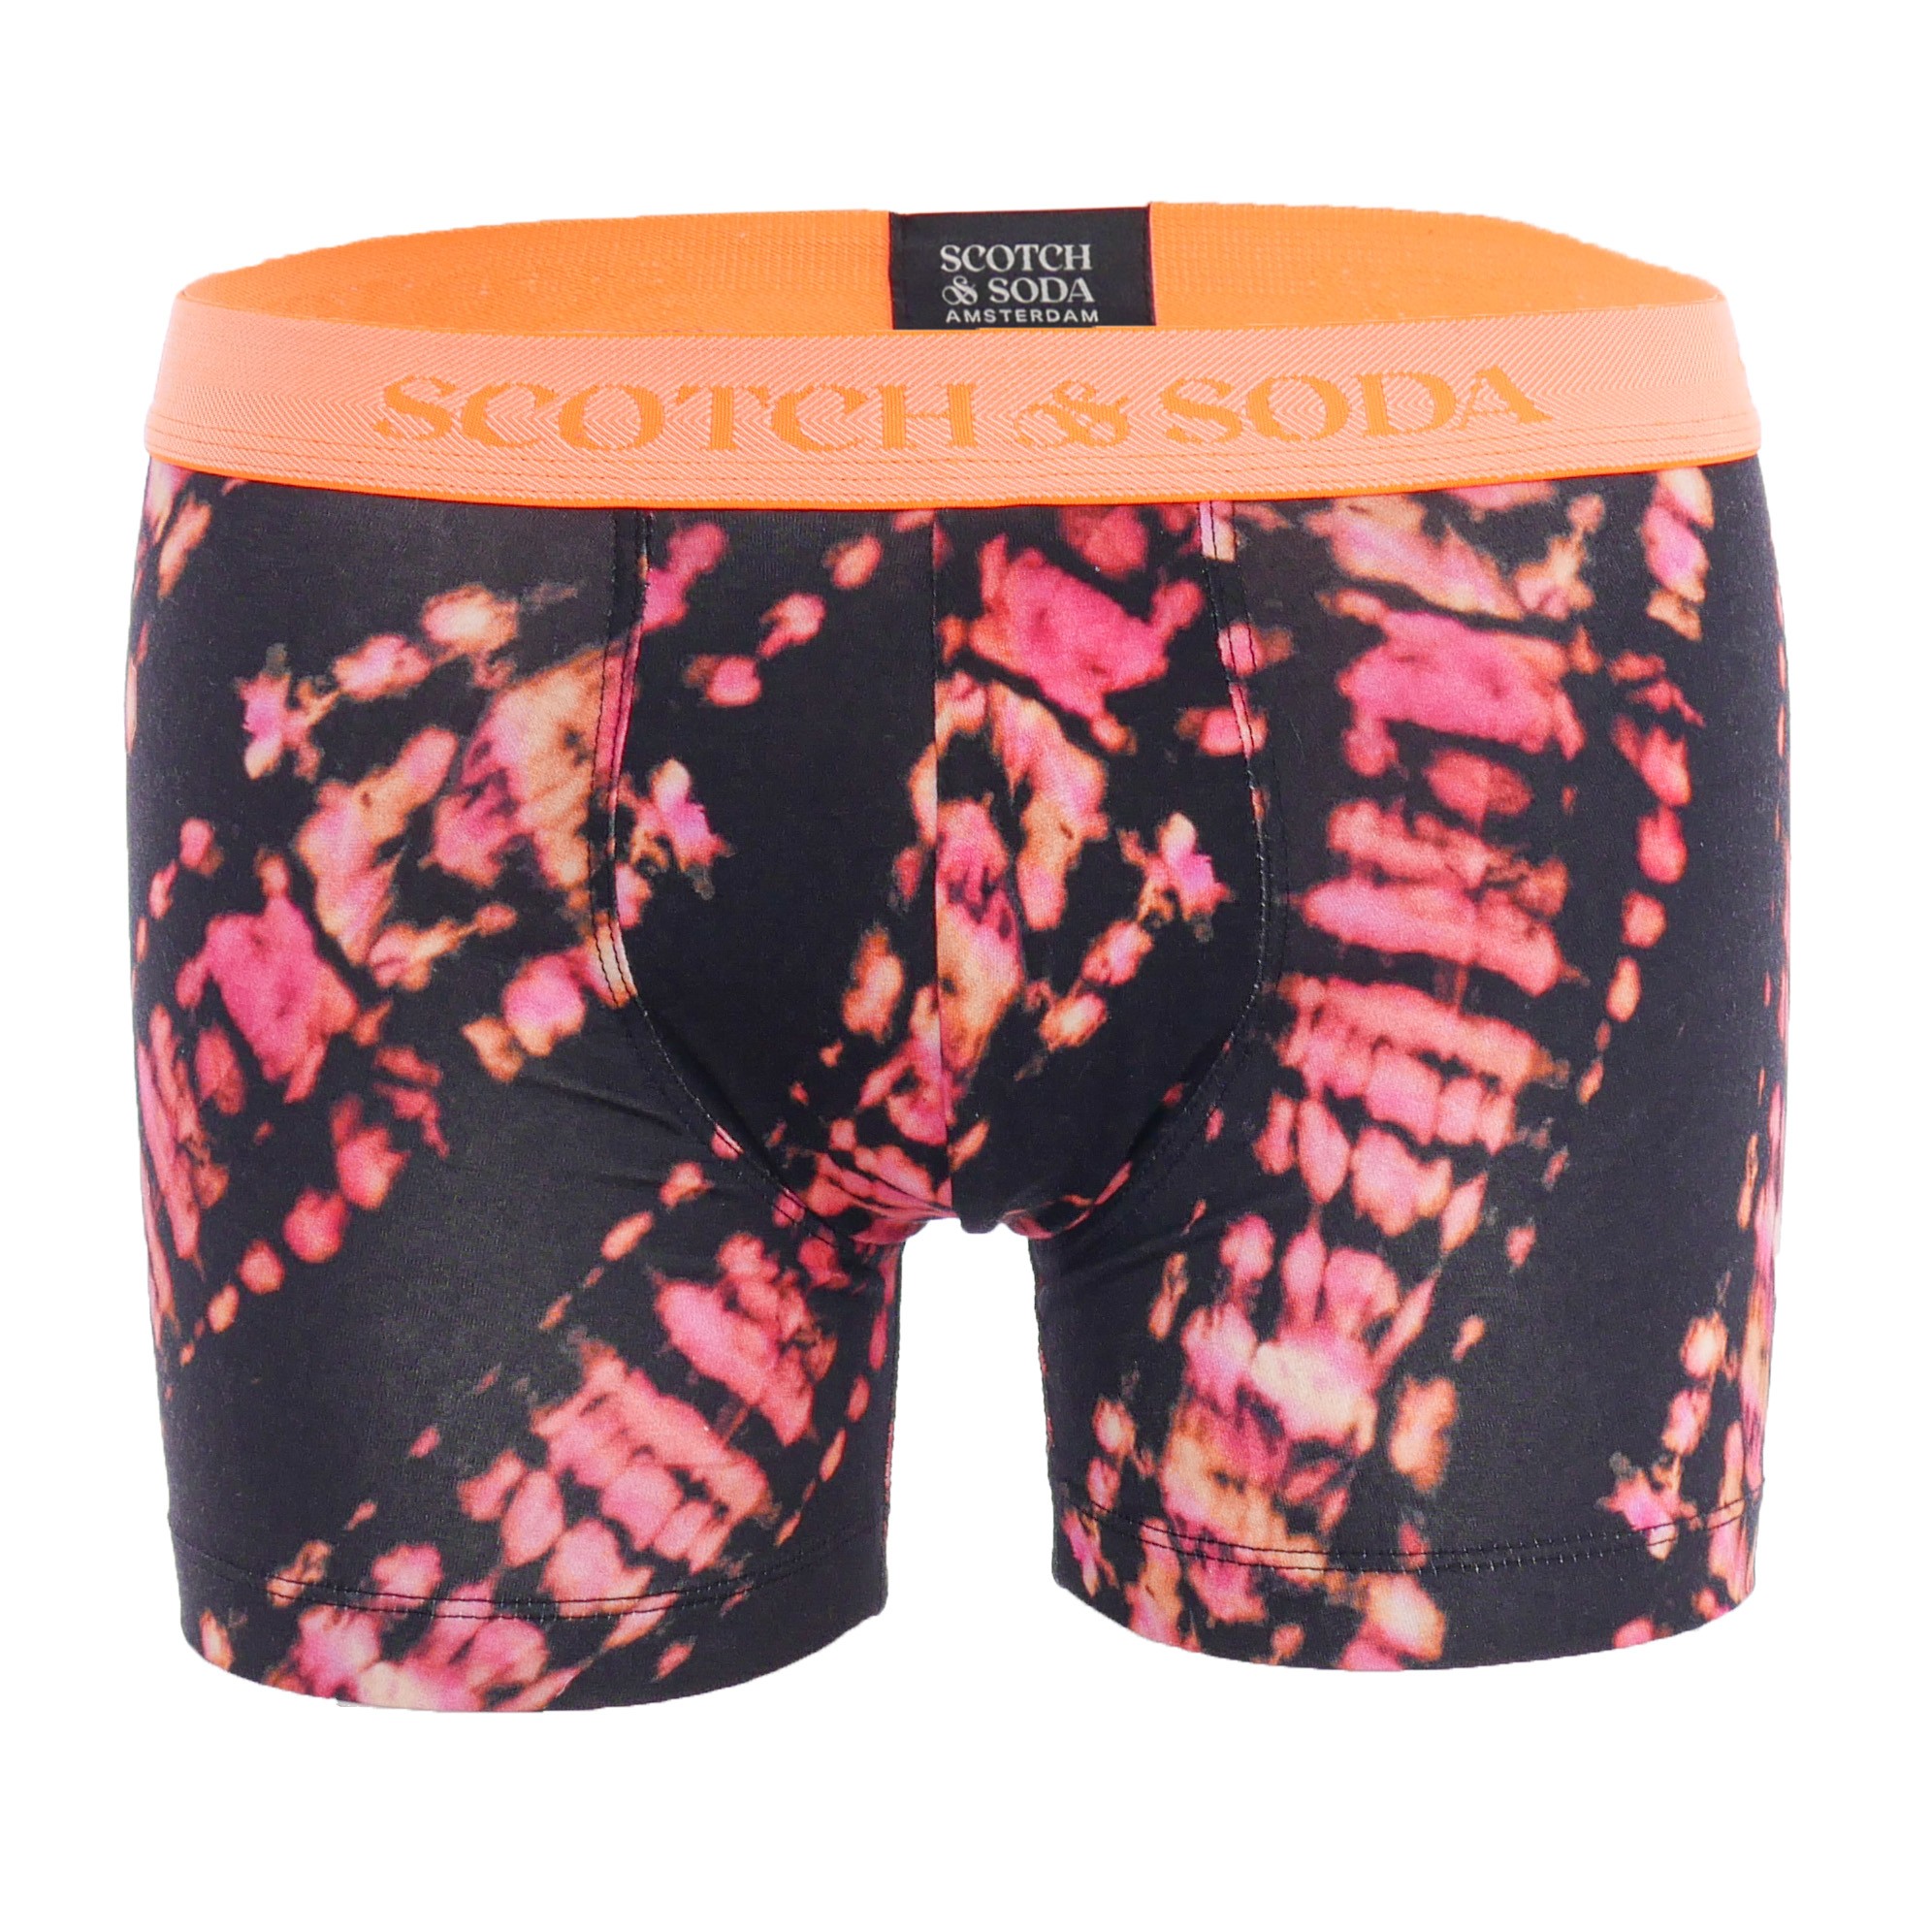 Shop SIX2 Carbon Underwear Boxer Shorts Online in Canada @ GP BIKES!